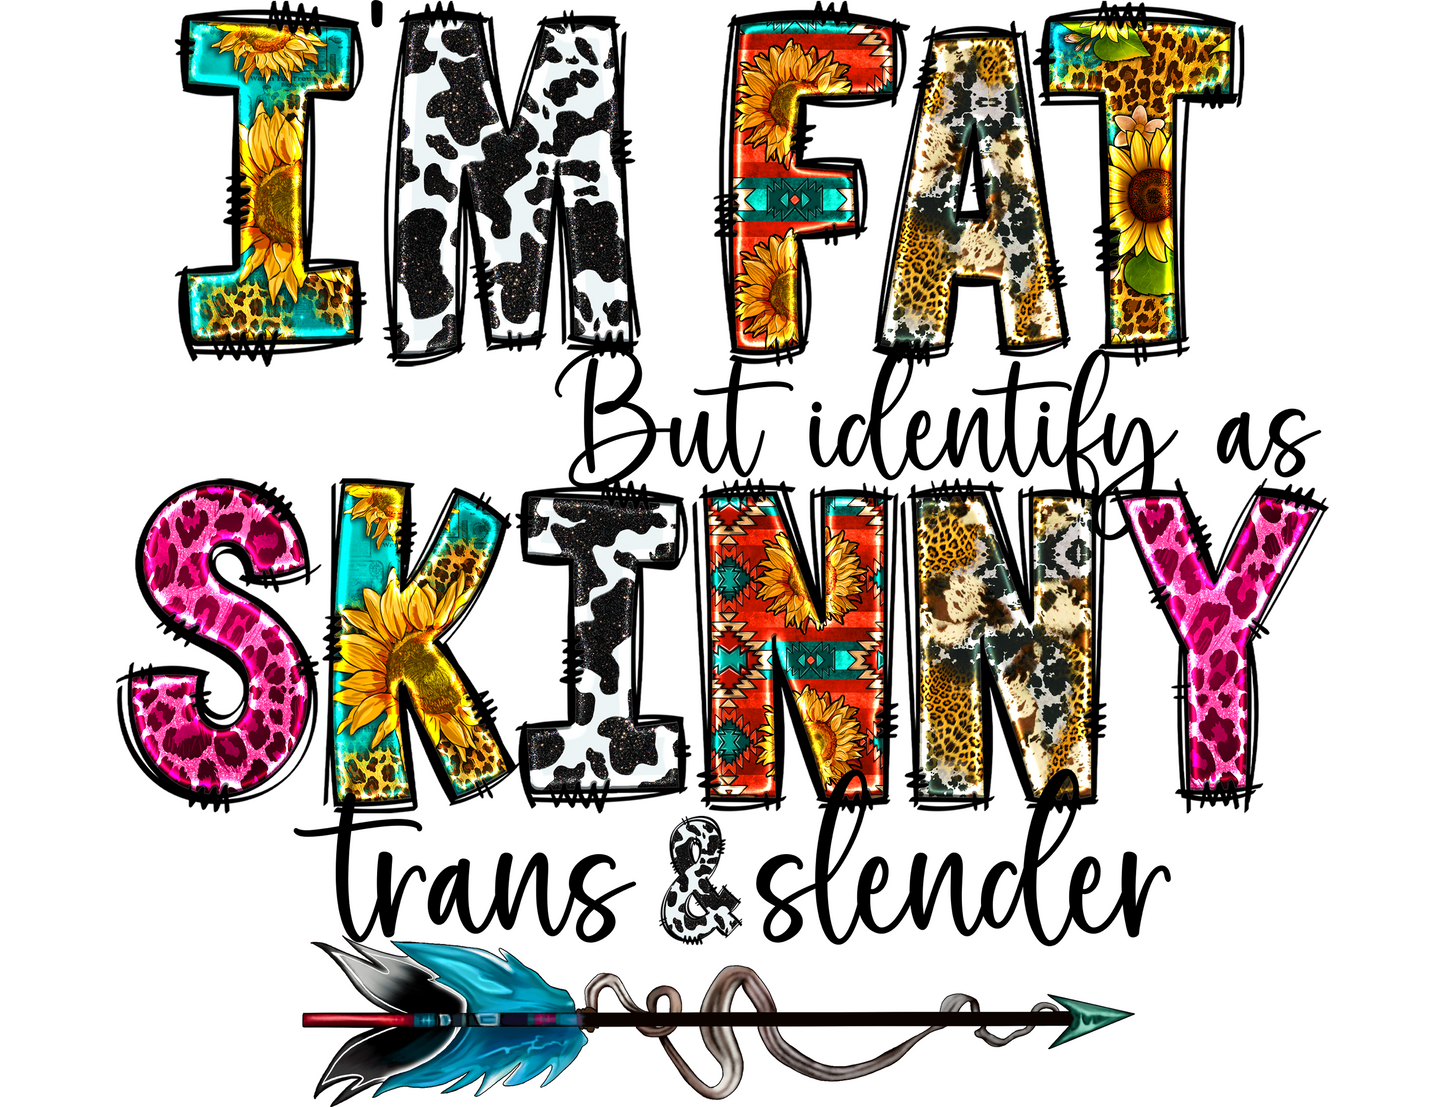 I'm fat but identify as skinny